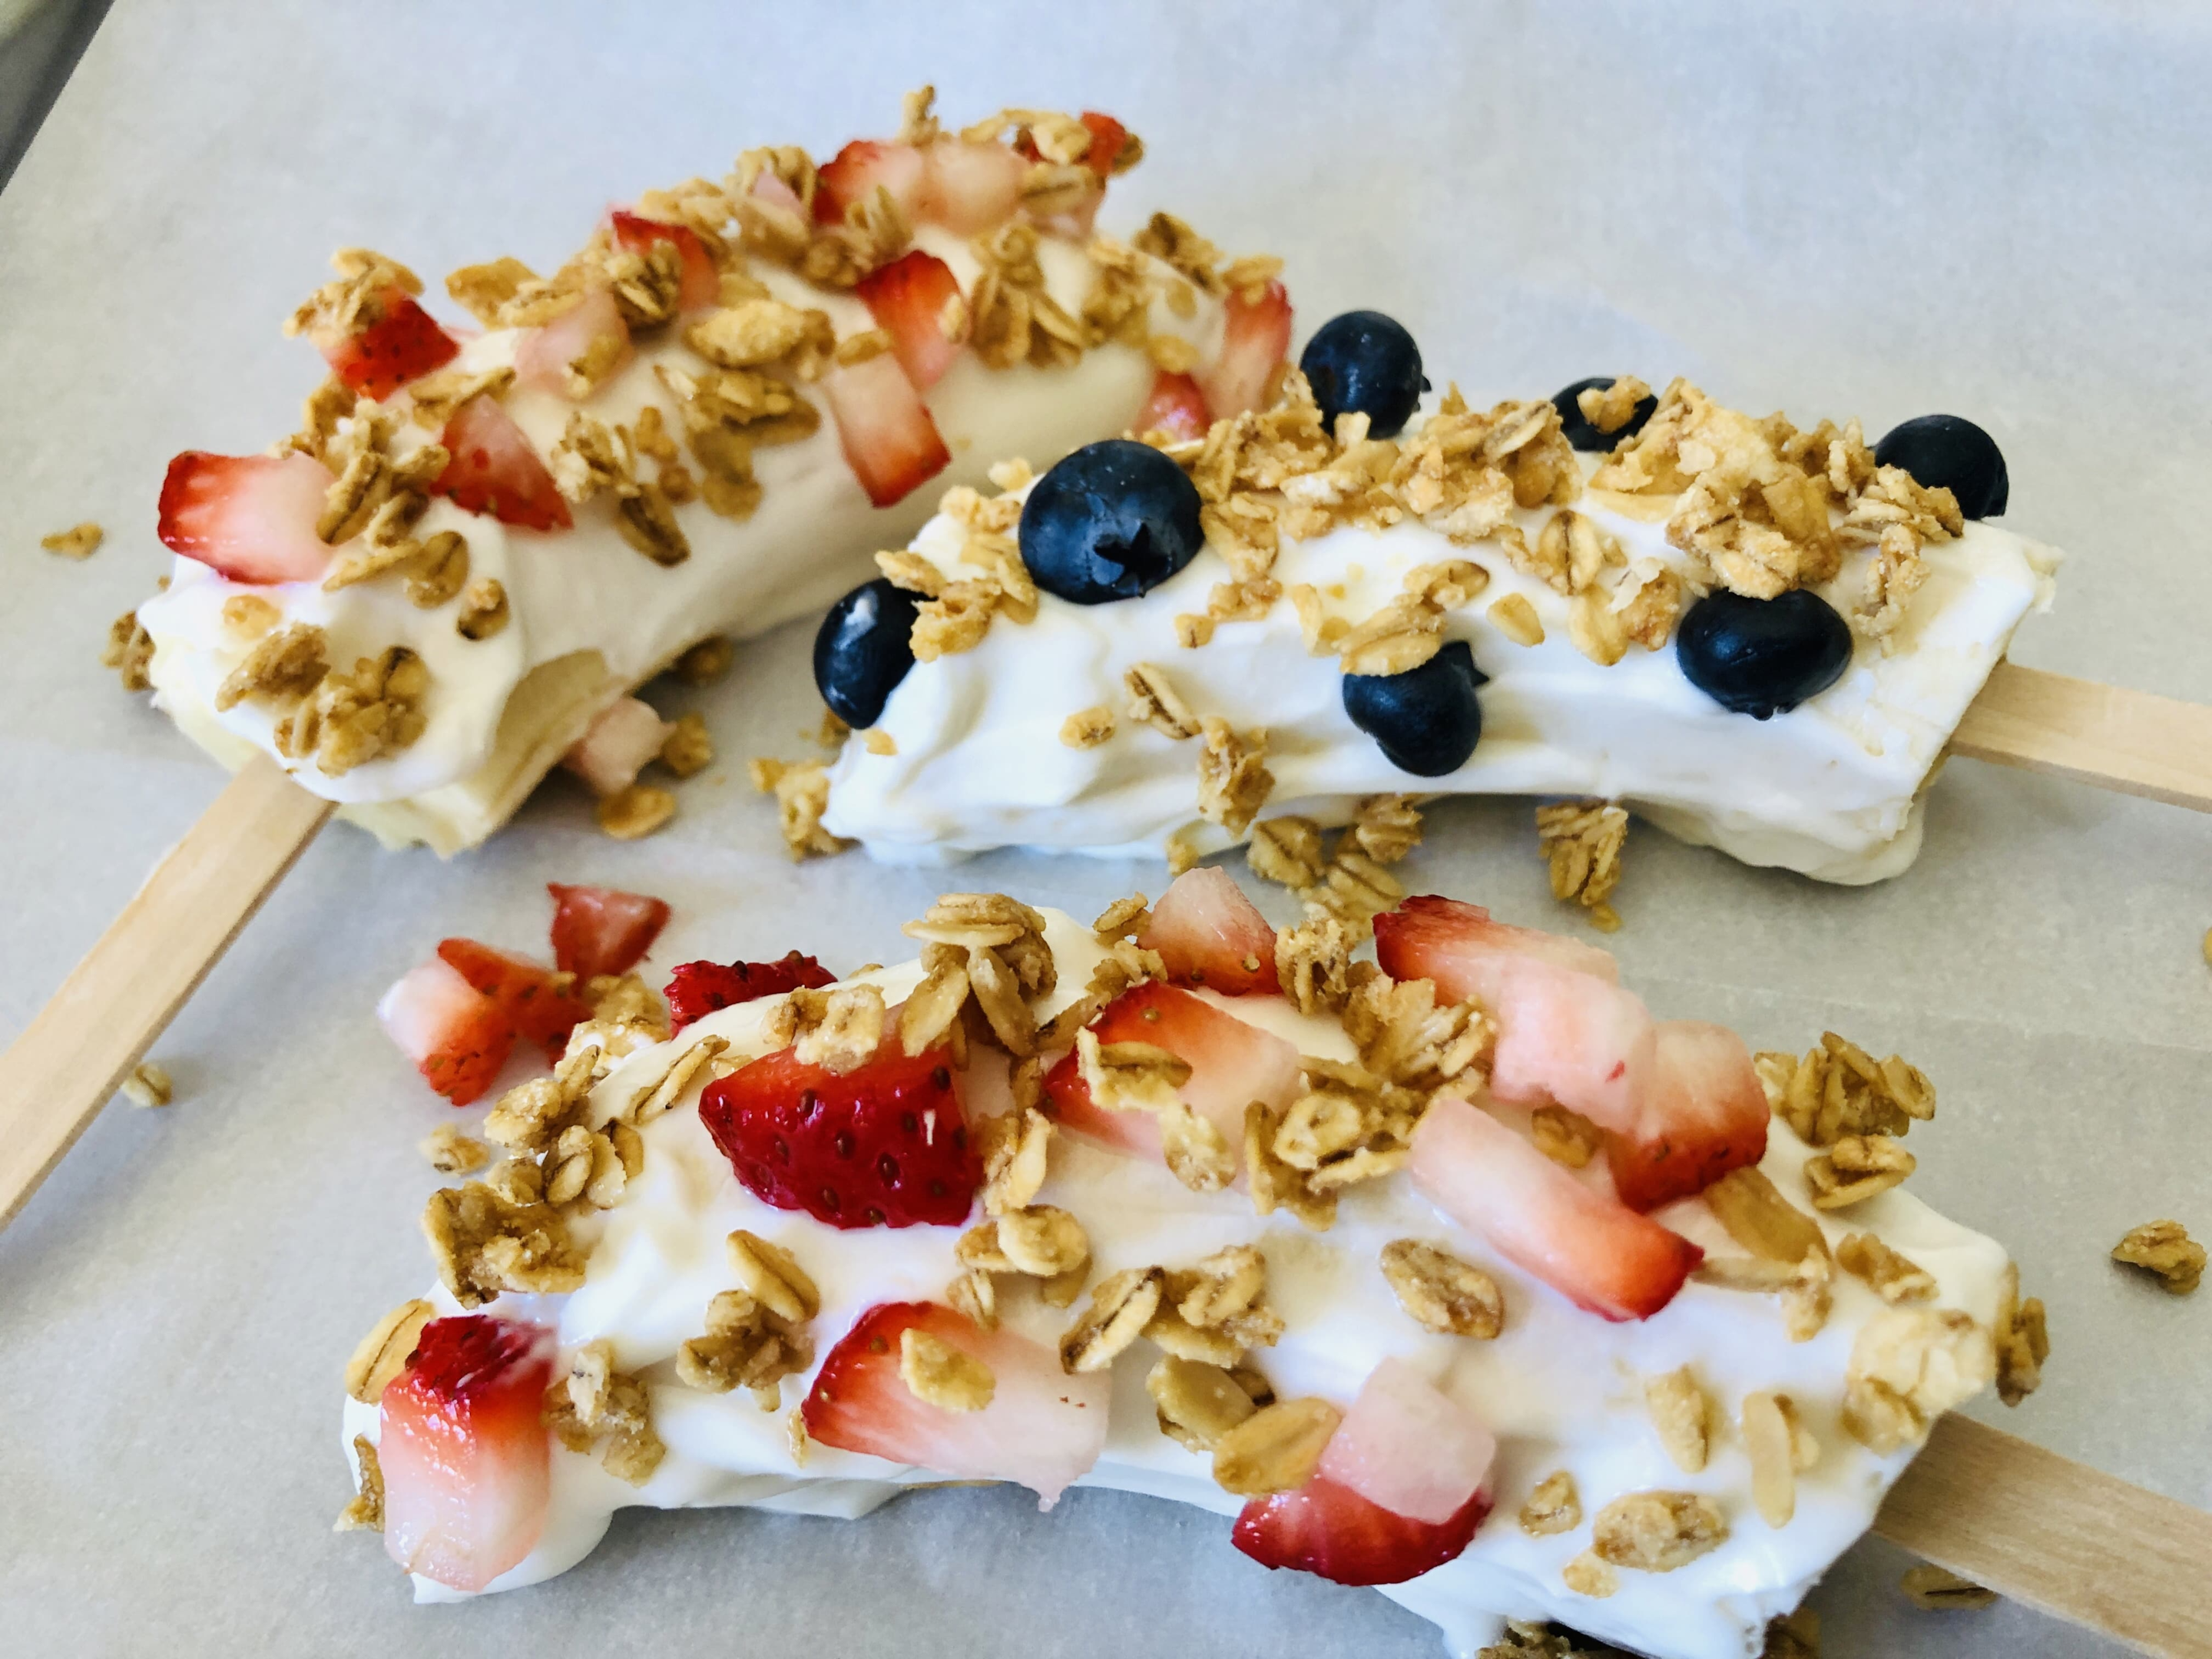 banana yogurt pops with fruit and granola